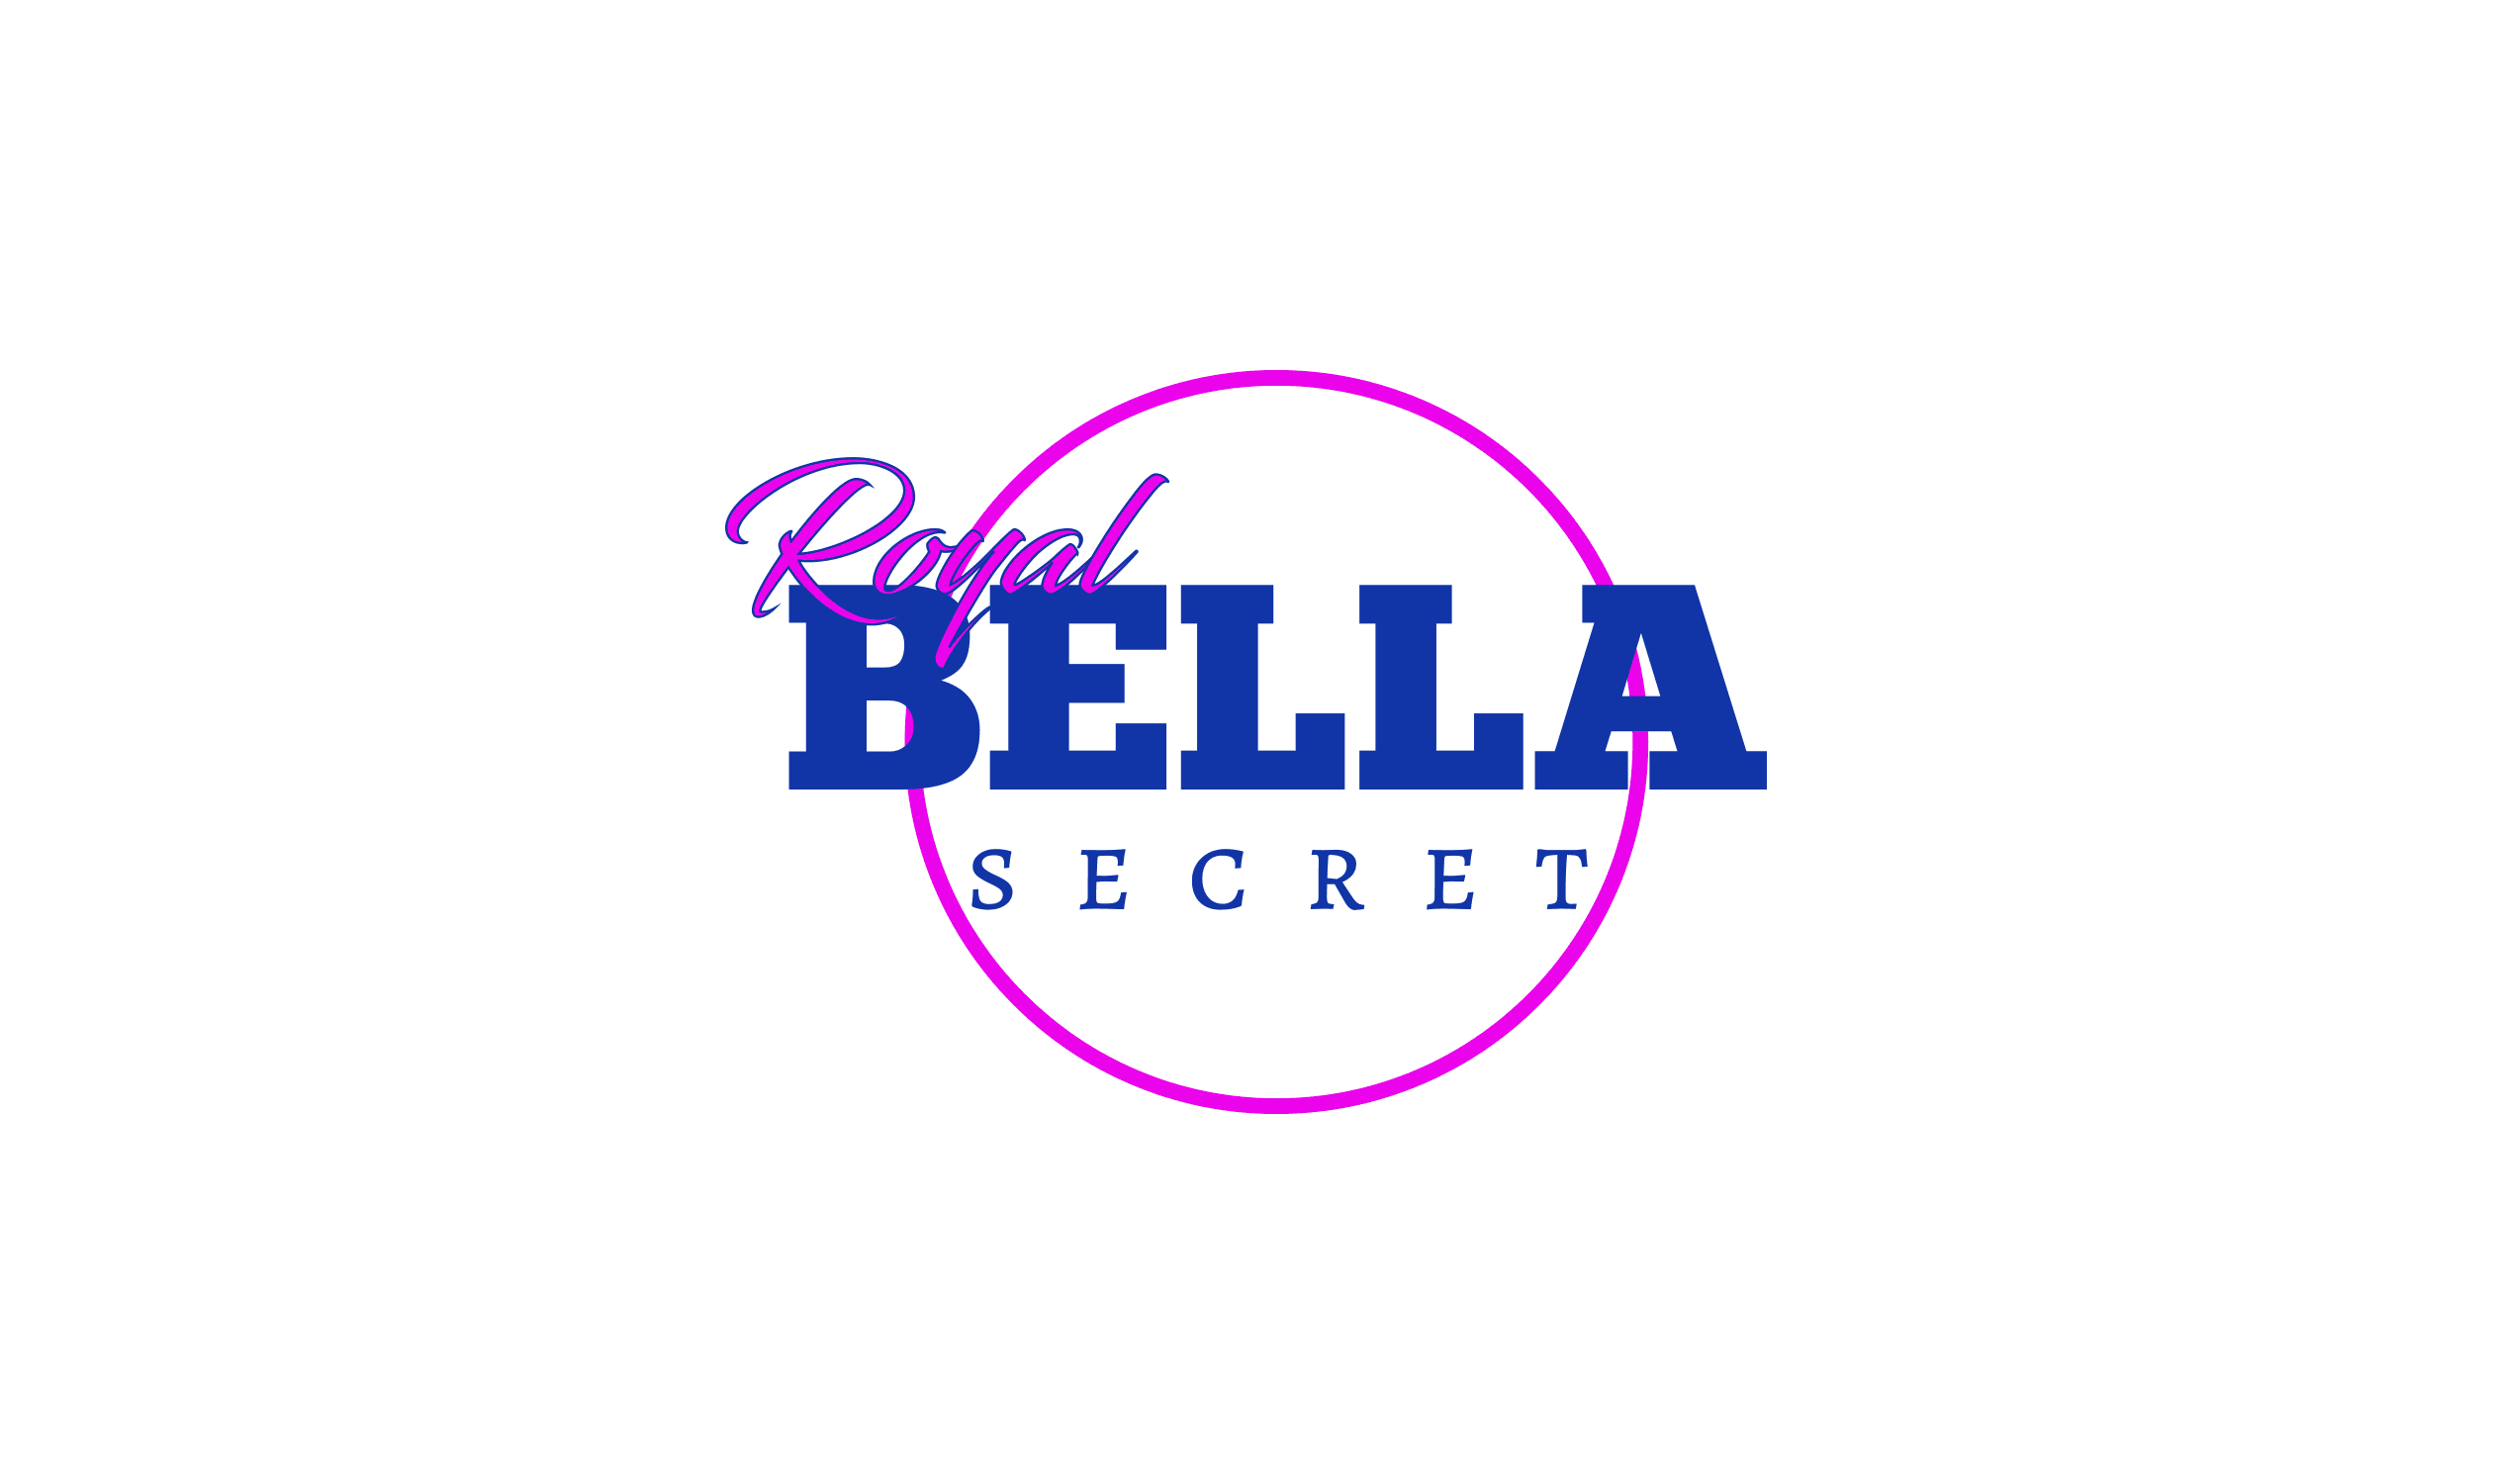 Royal Bella Secret